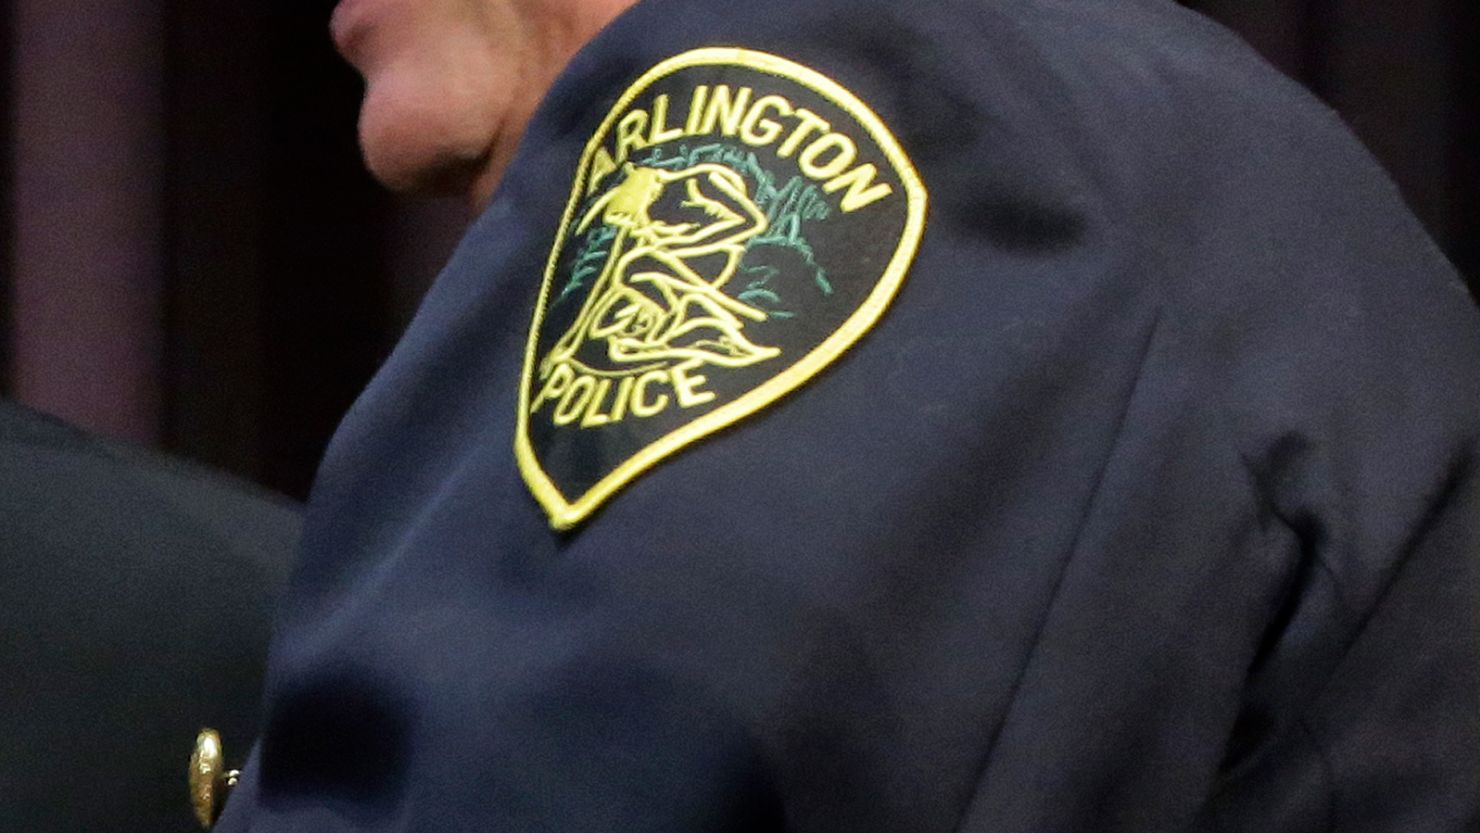 An Arlington Police patch is seen on an officer's uniform. 